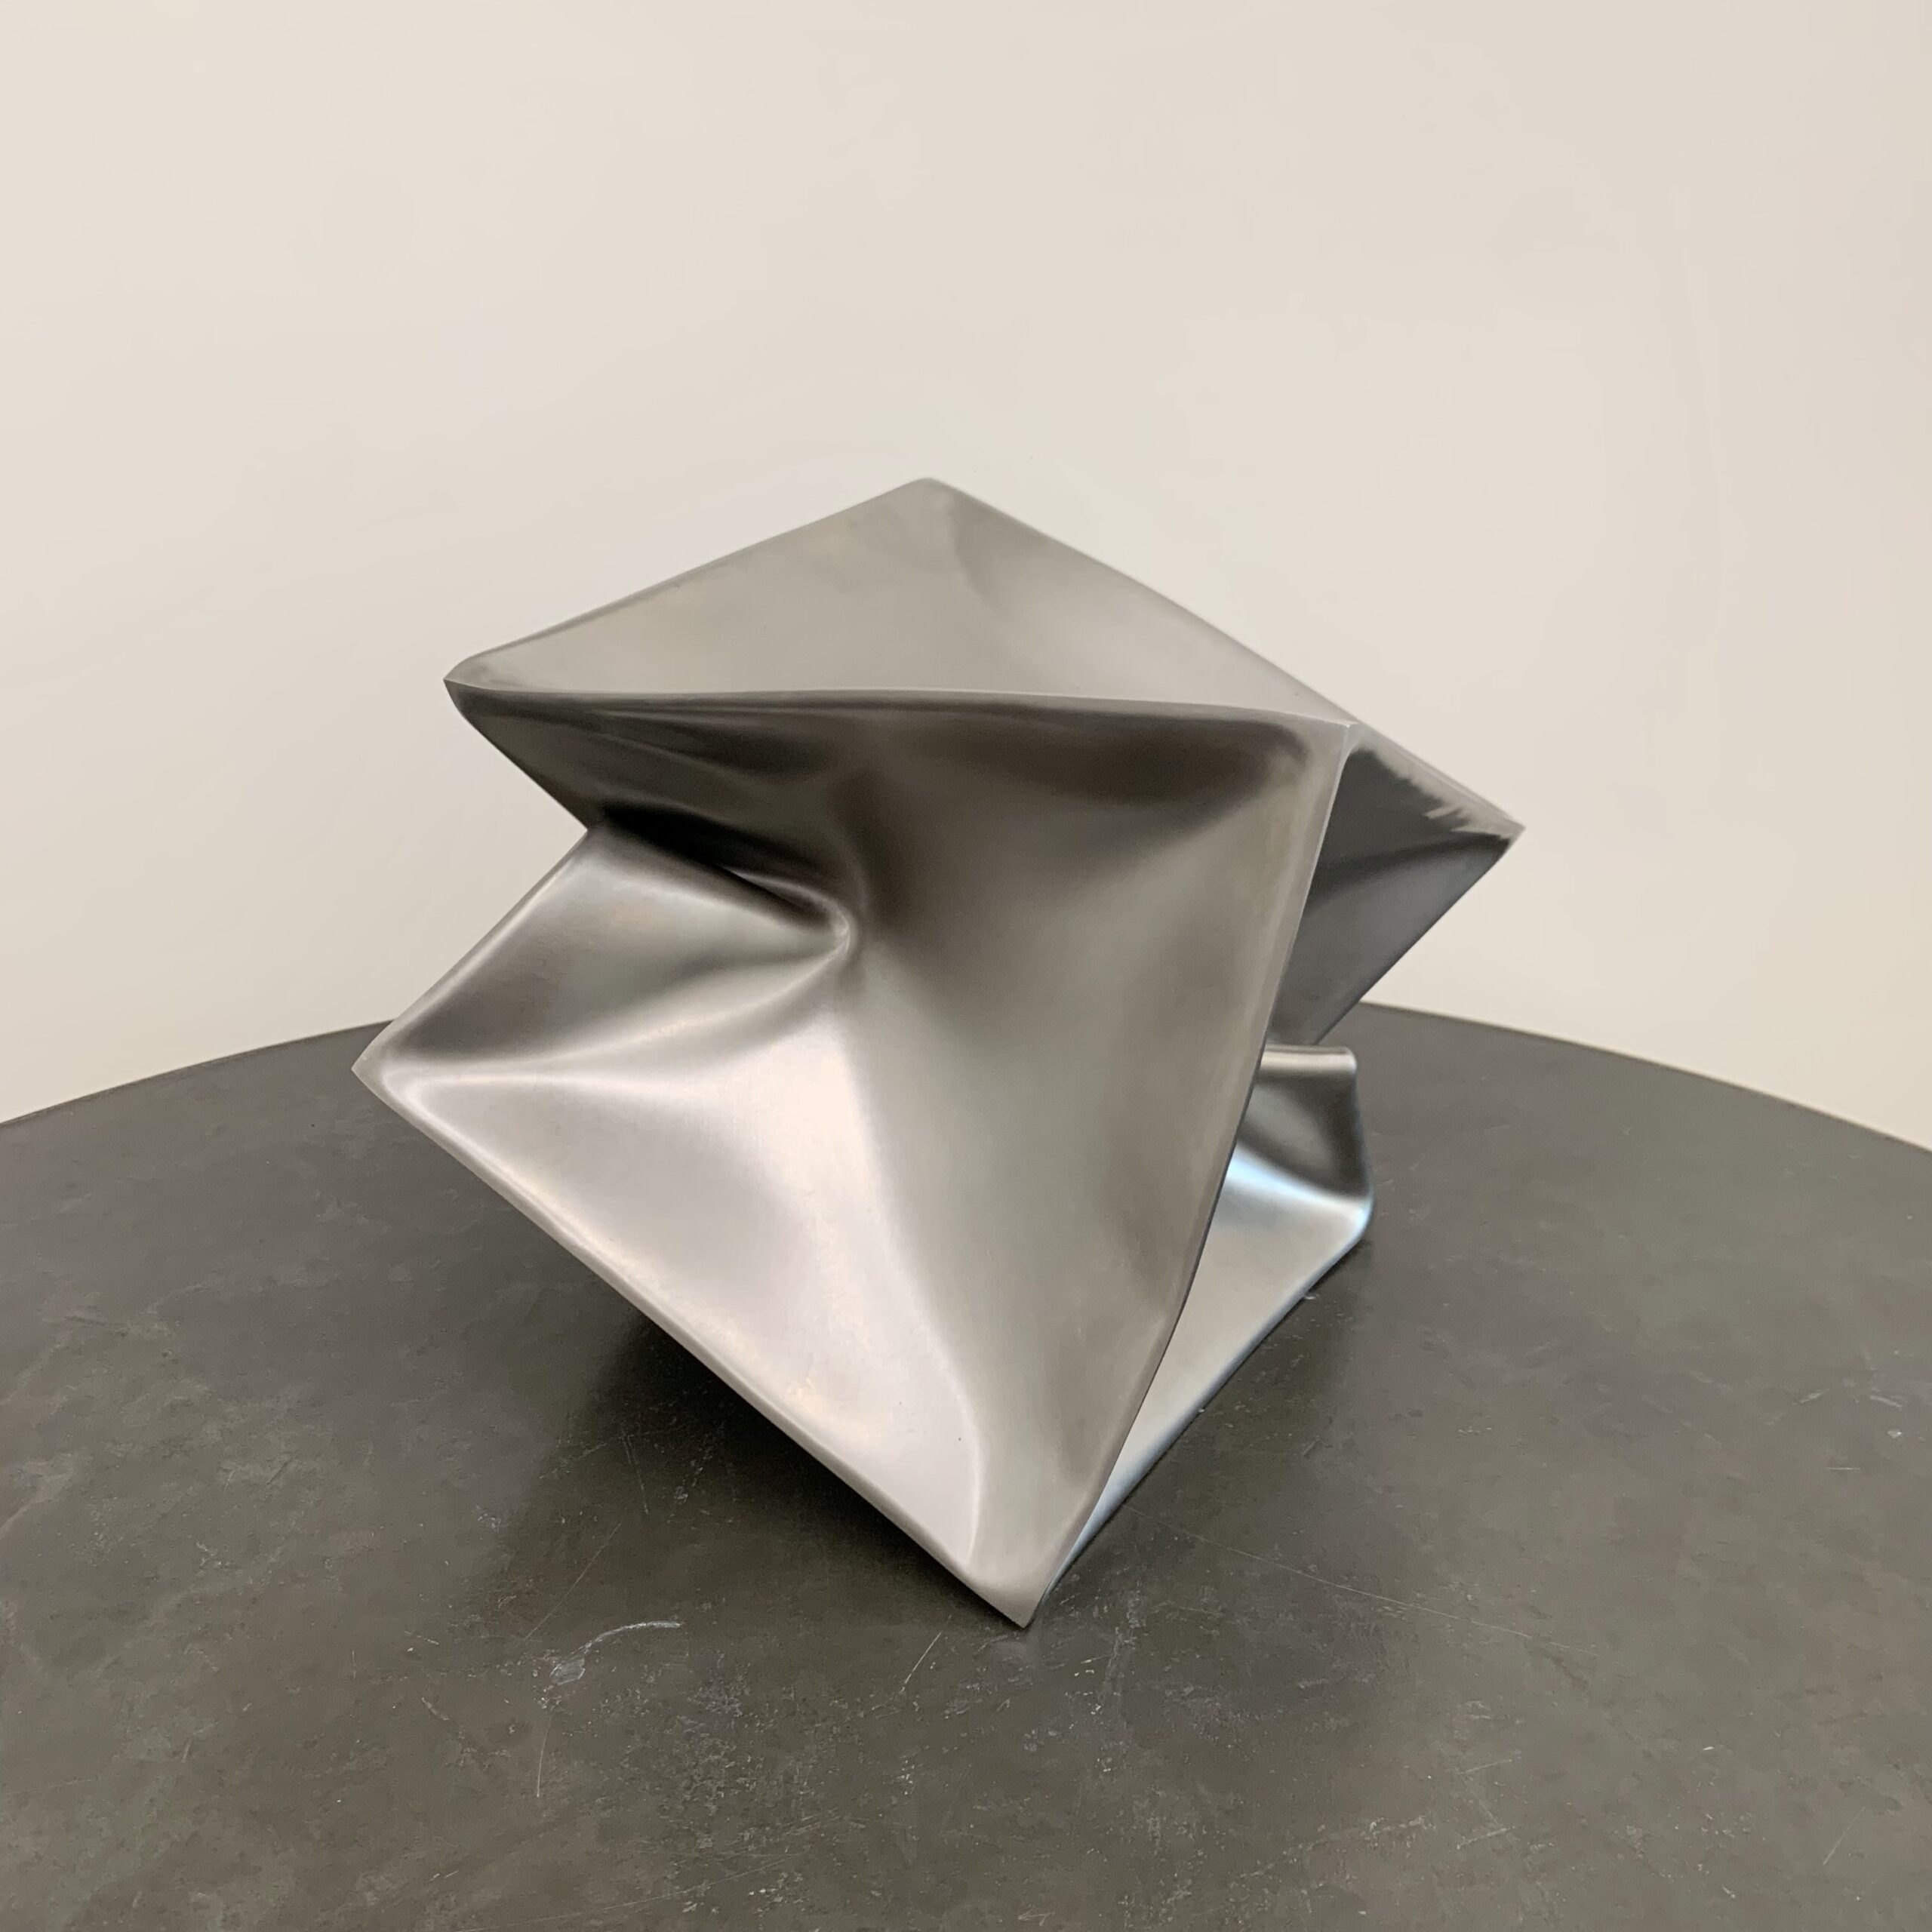 Ewerdt Hilgemann - Imploded Cube, 2002